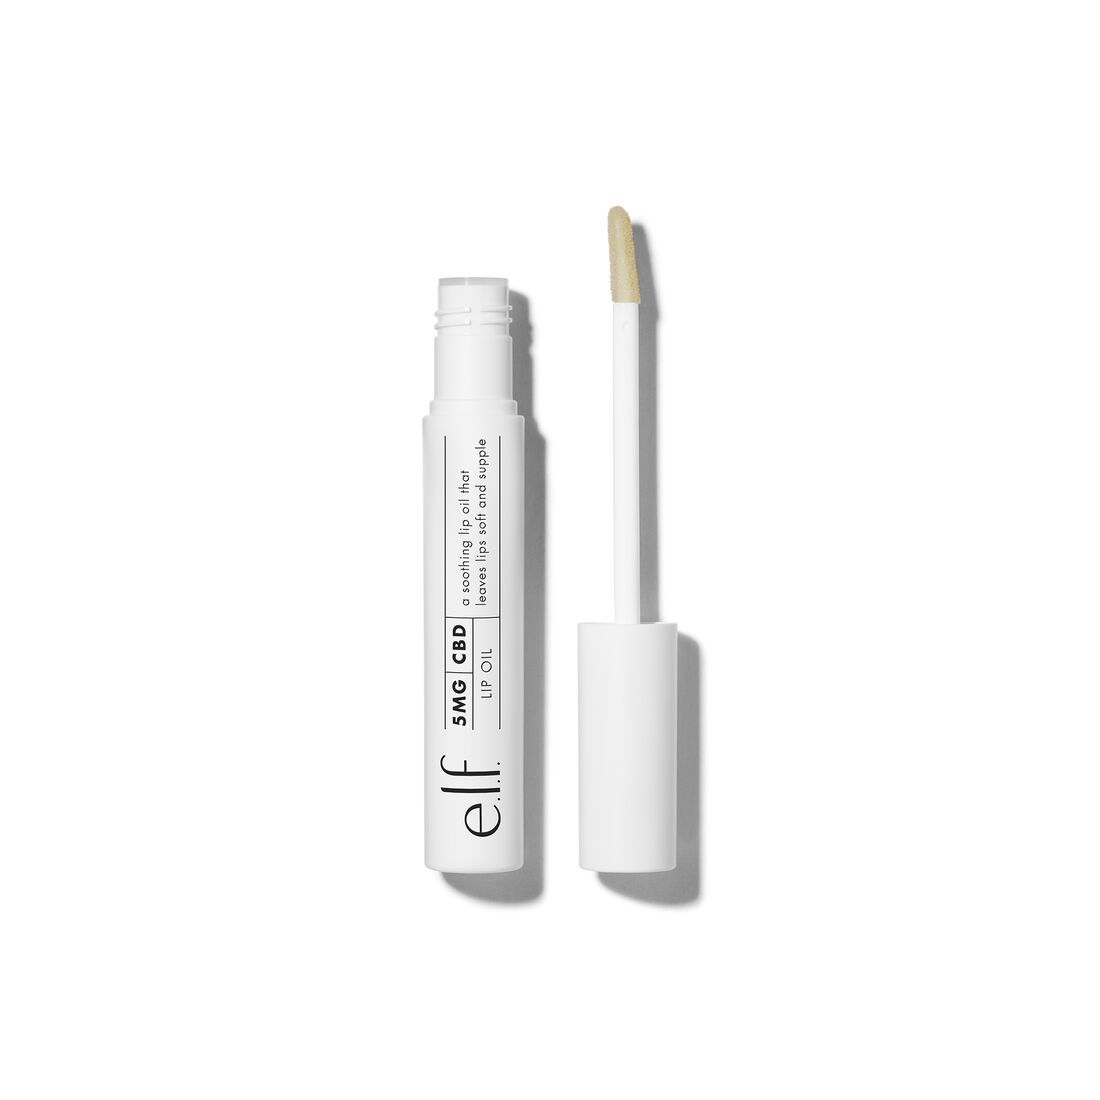 5 mg CBD Lip Oil | e.l.f. cosmetics (US)